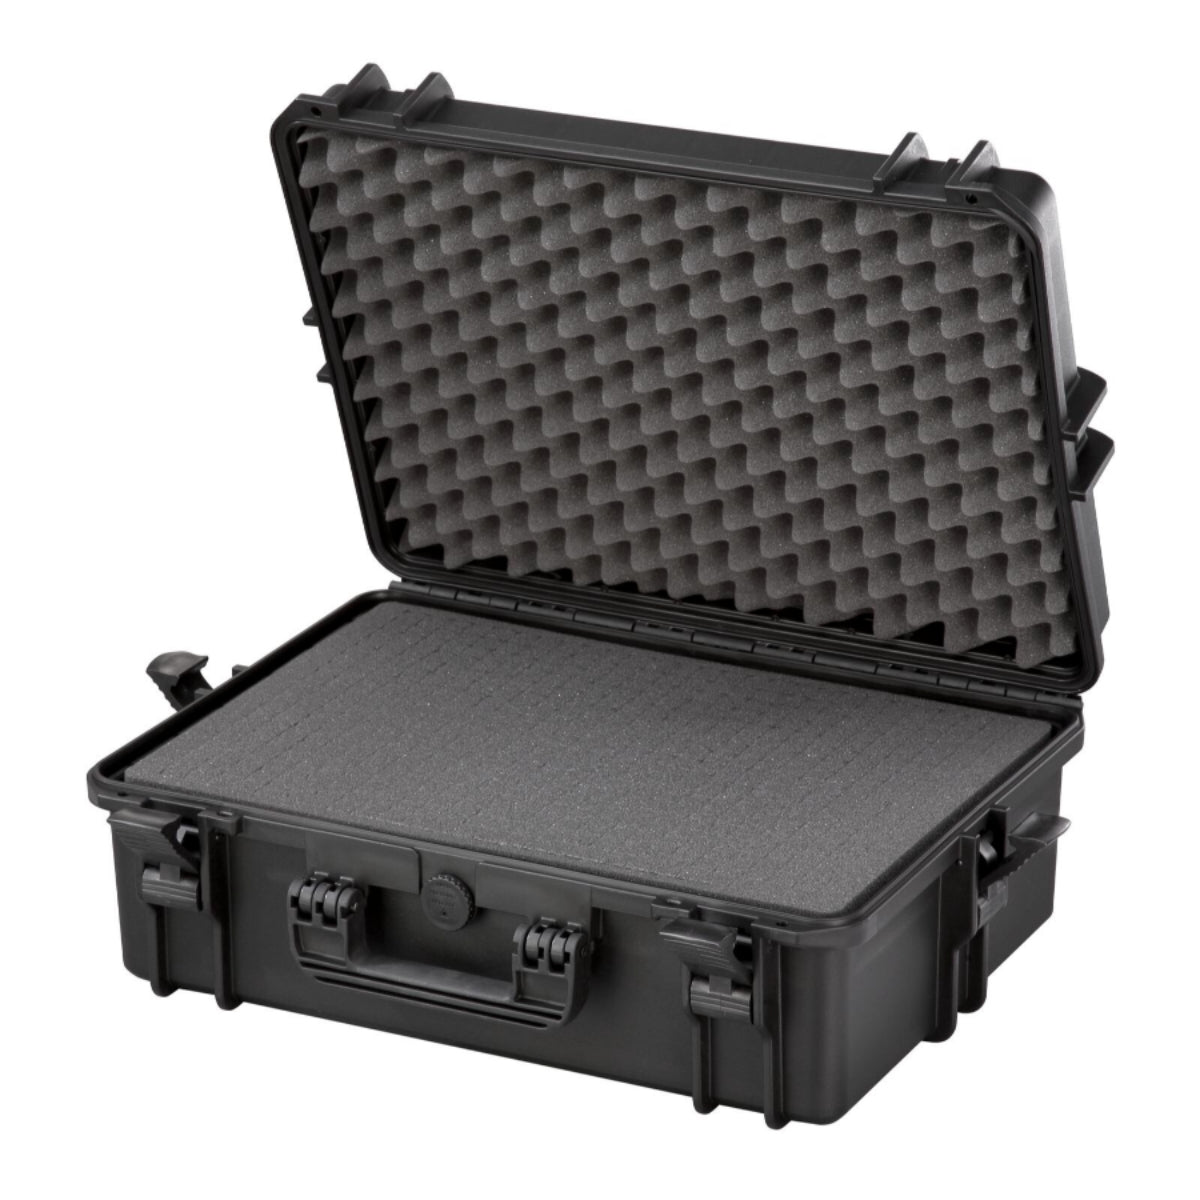 SP PRO 505STR Black Trolley Case, Cubed Foam, ID: L500xW350xH194mm